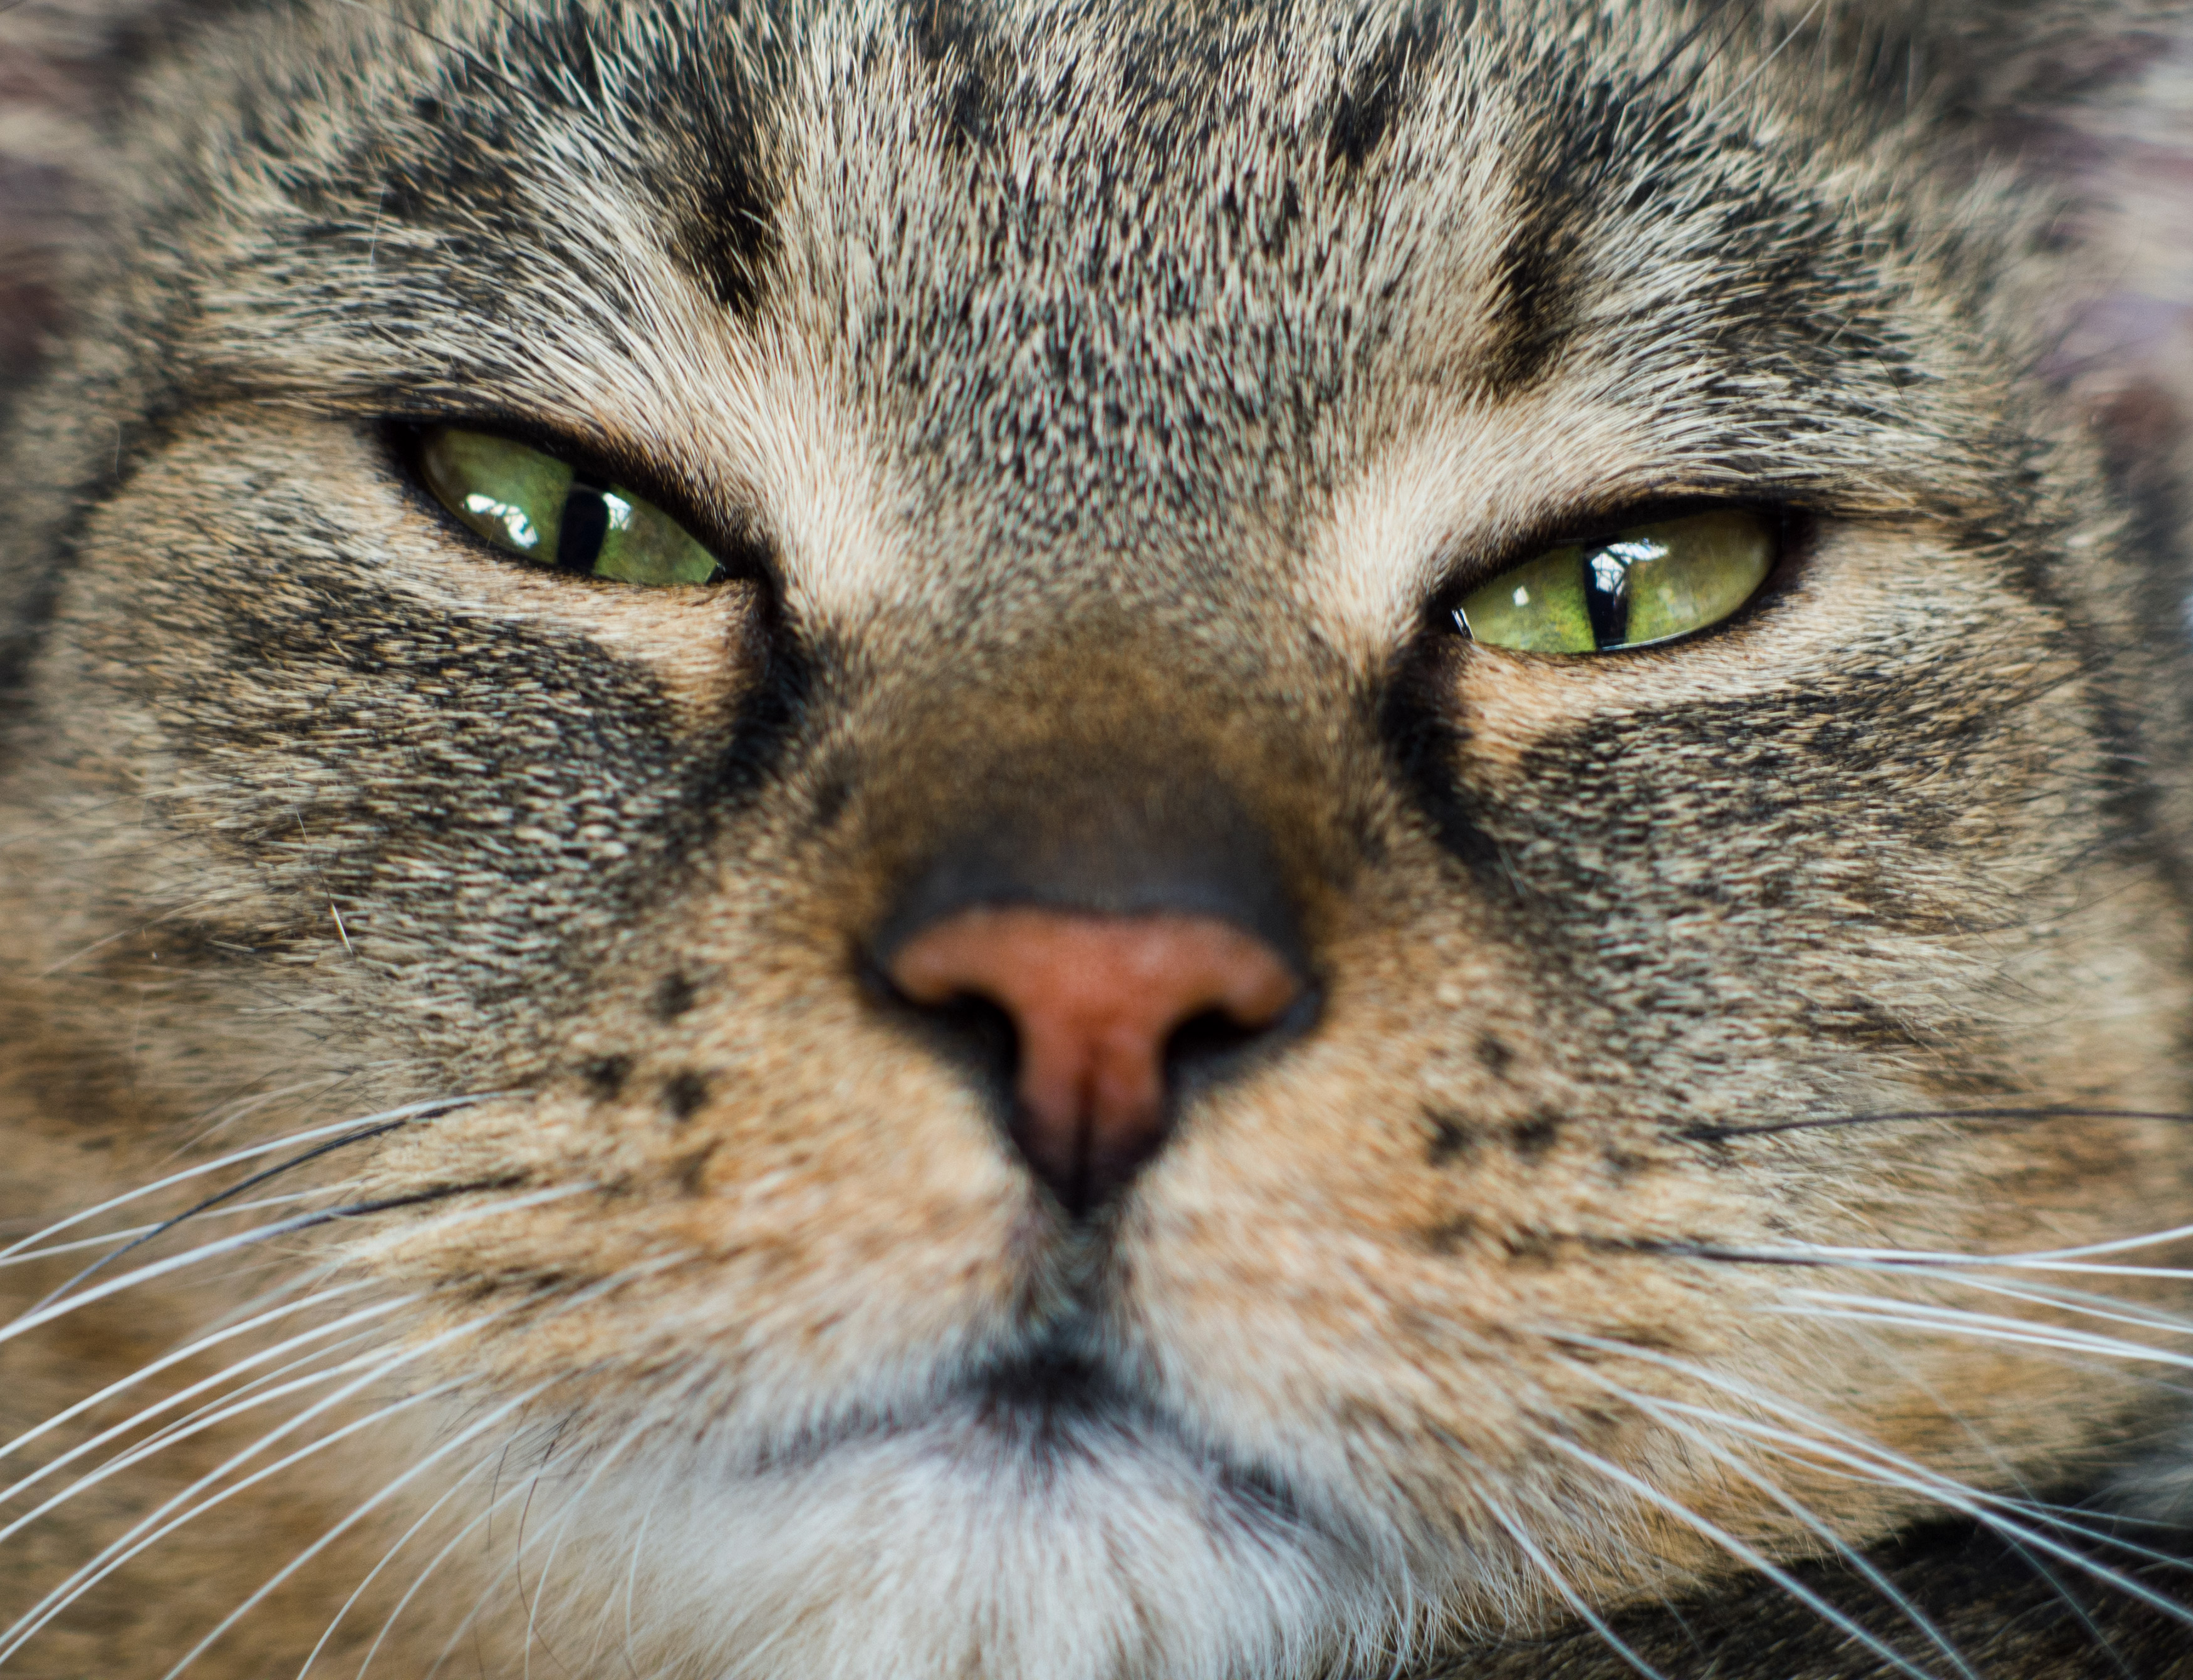 Free Image: Cat's Face Close Up | Libreshot Public Domain Photos